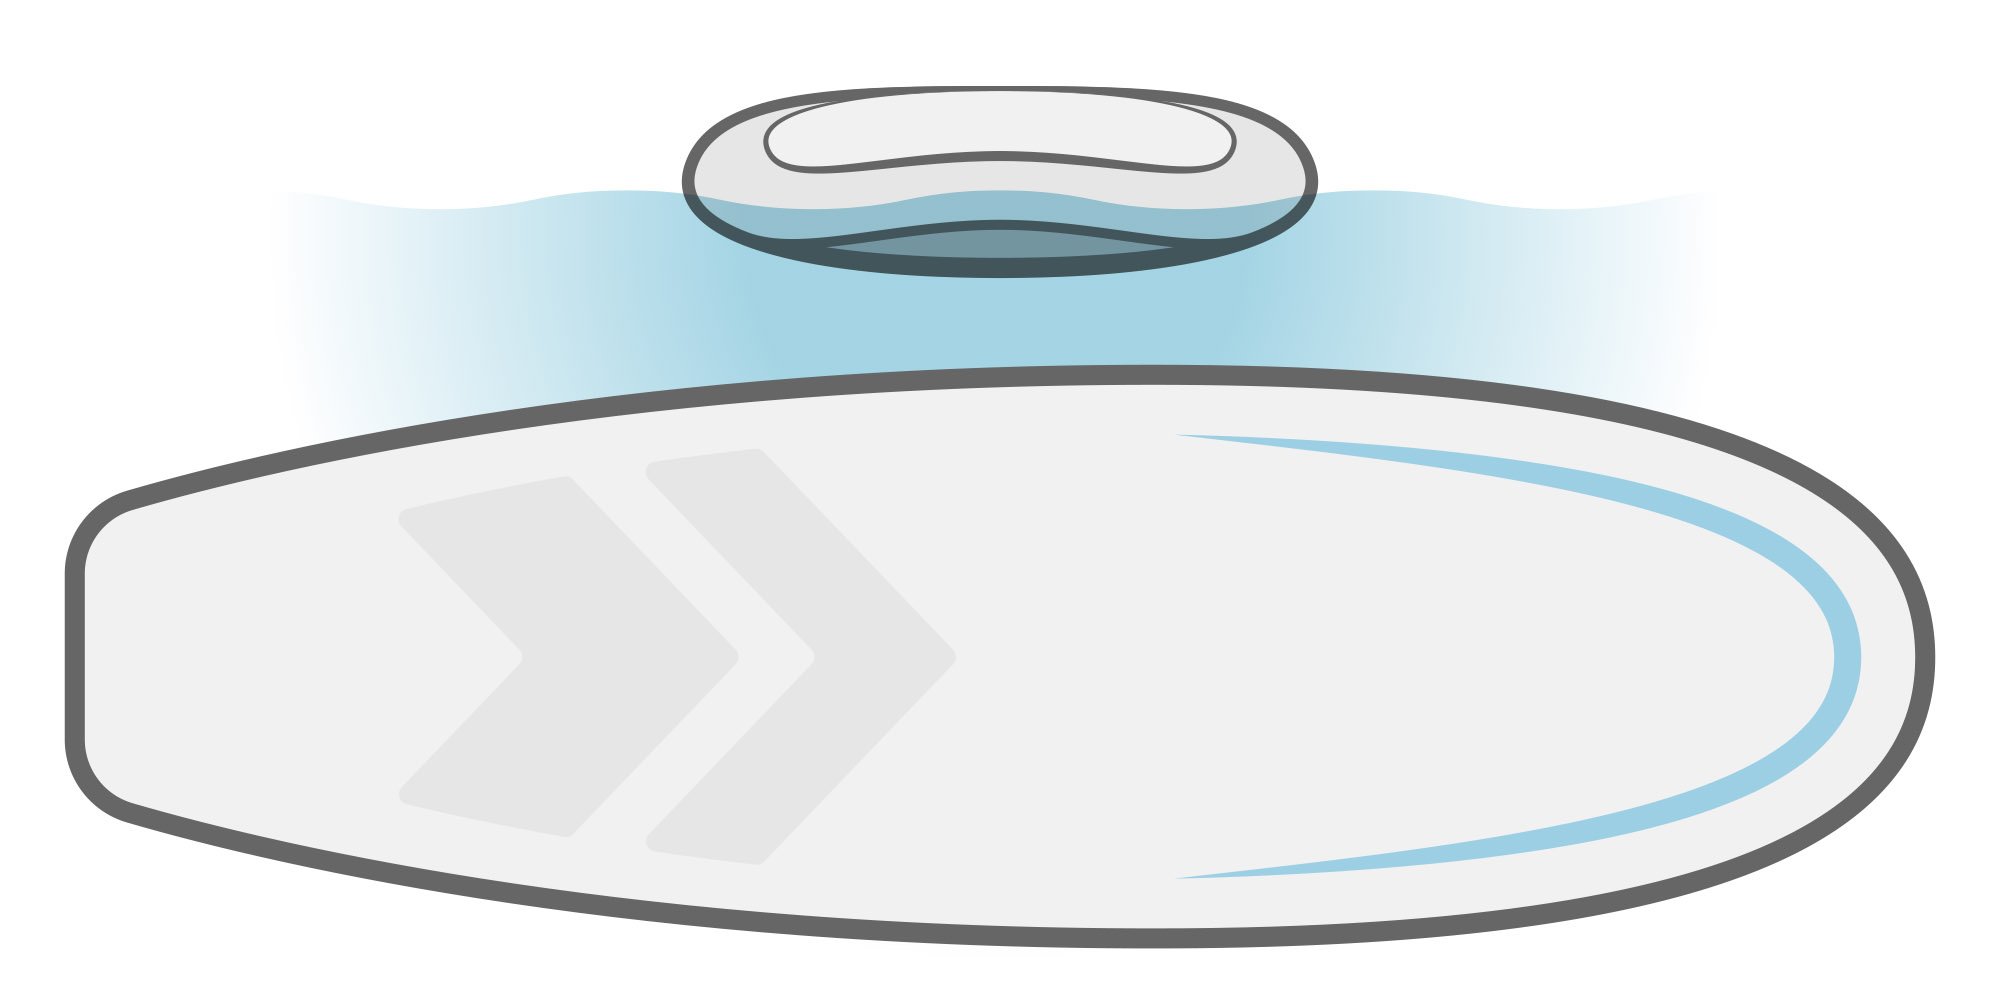 Illustration du paddleboard SUP avec coque ronde.